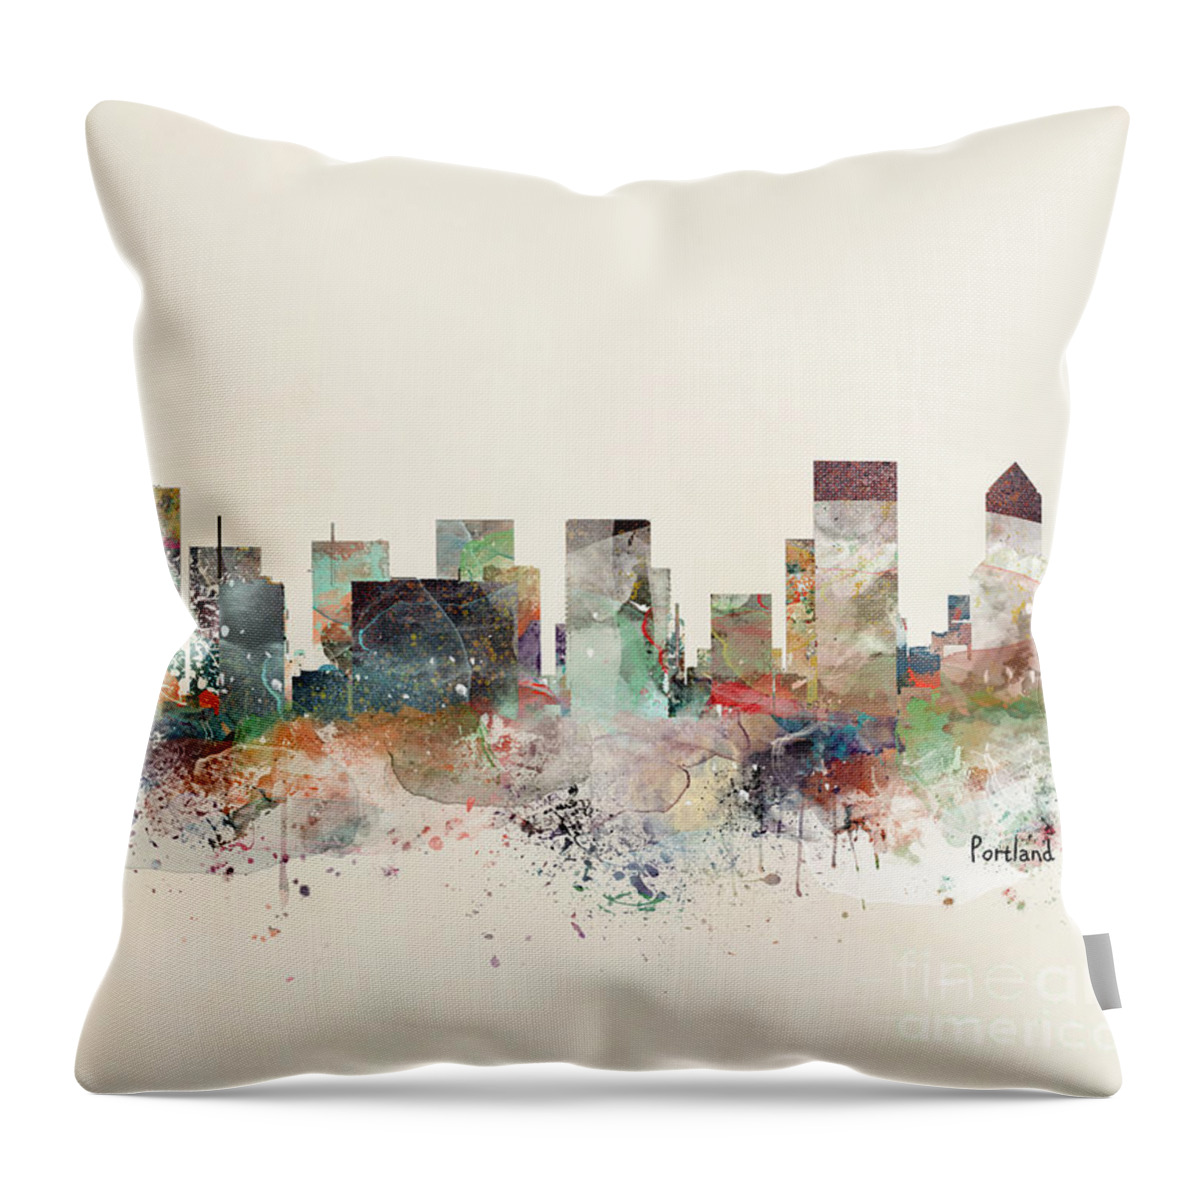 Portland Throw Pillow featuring the painting Portland Oregon Skyline by Bri Buckley